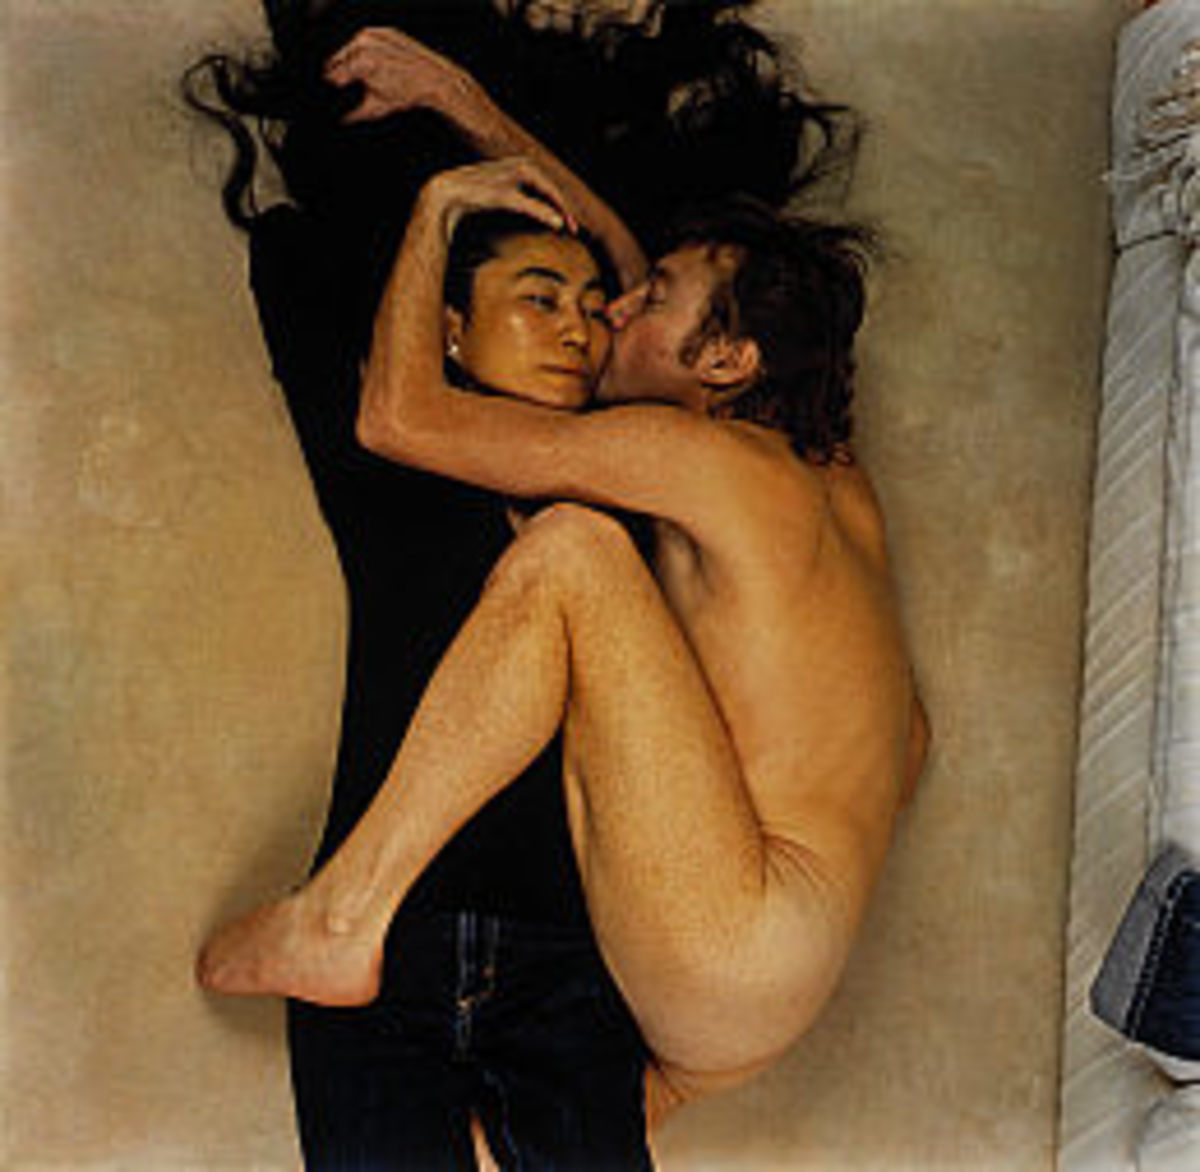 John Lennon and Yoko Ono, 1980.  Photo taken by Annie Leibovitz only a few hours before John Lennon was shot dead.